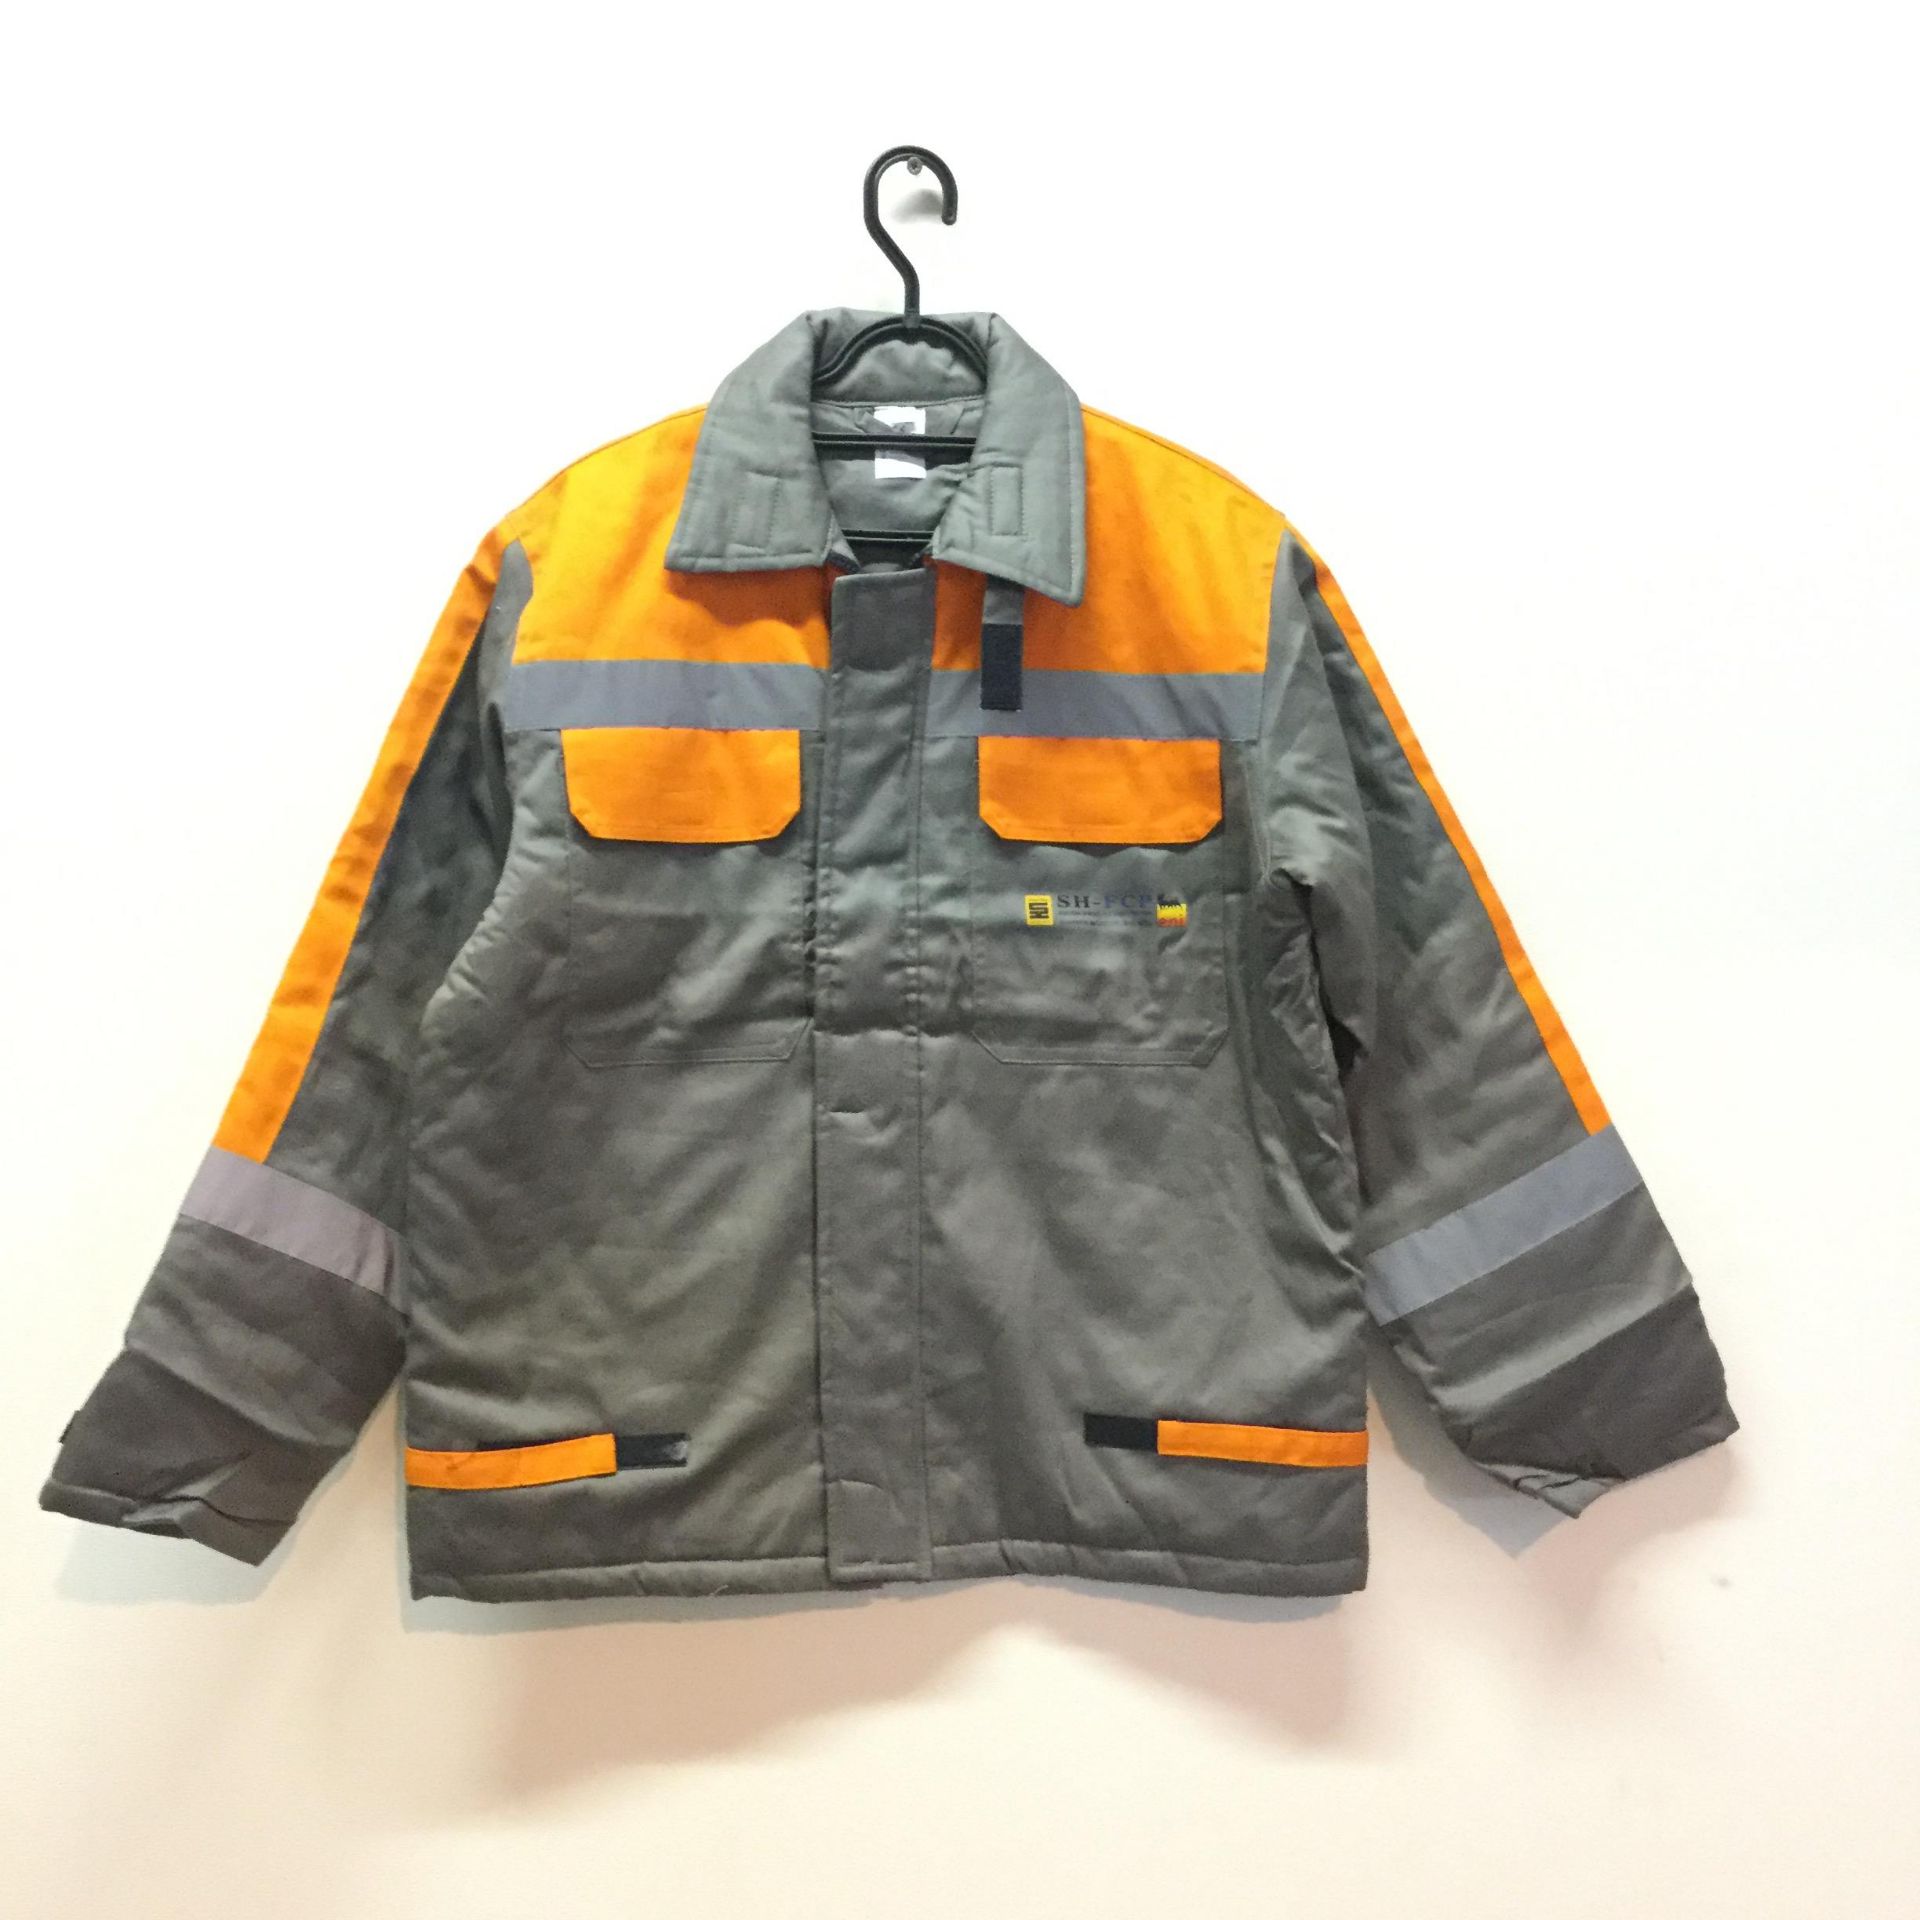 Flame Retardant Winter Jacket - Size 56